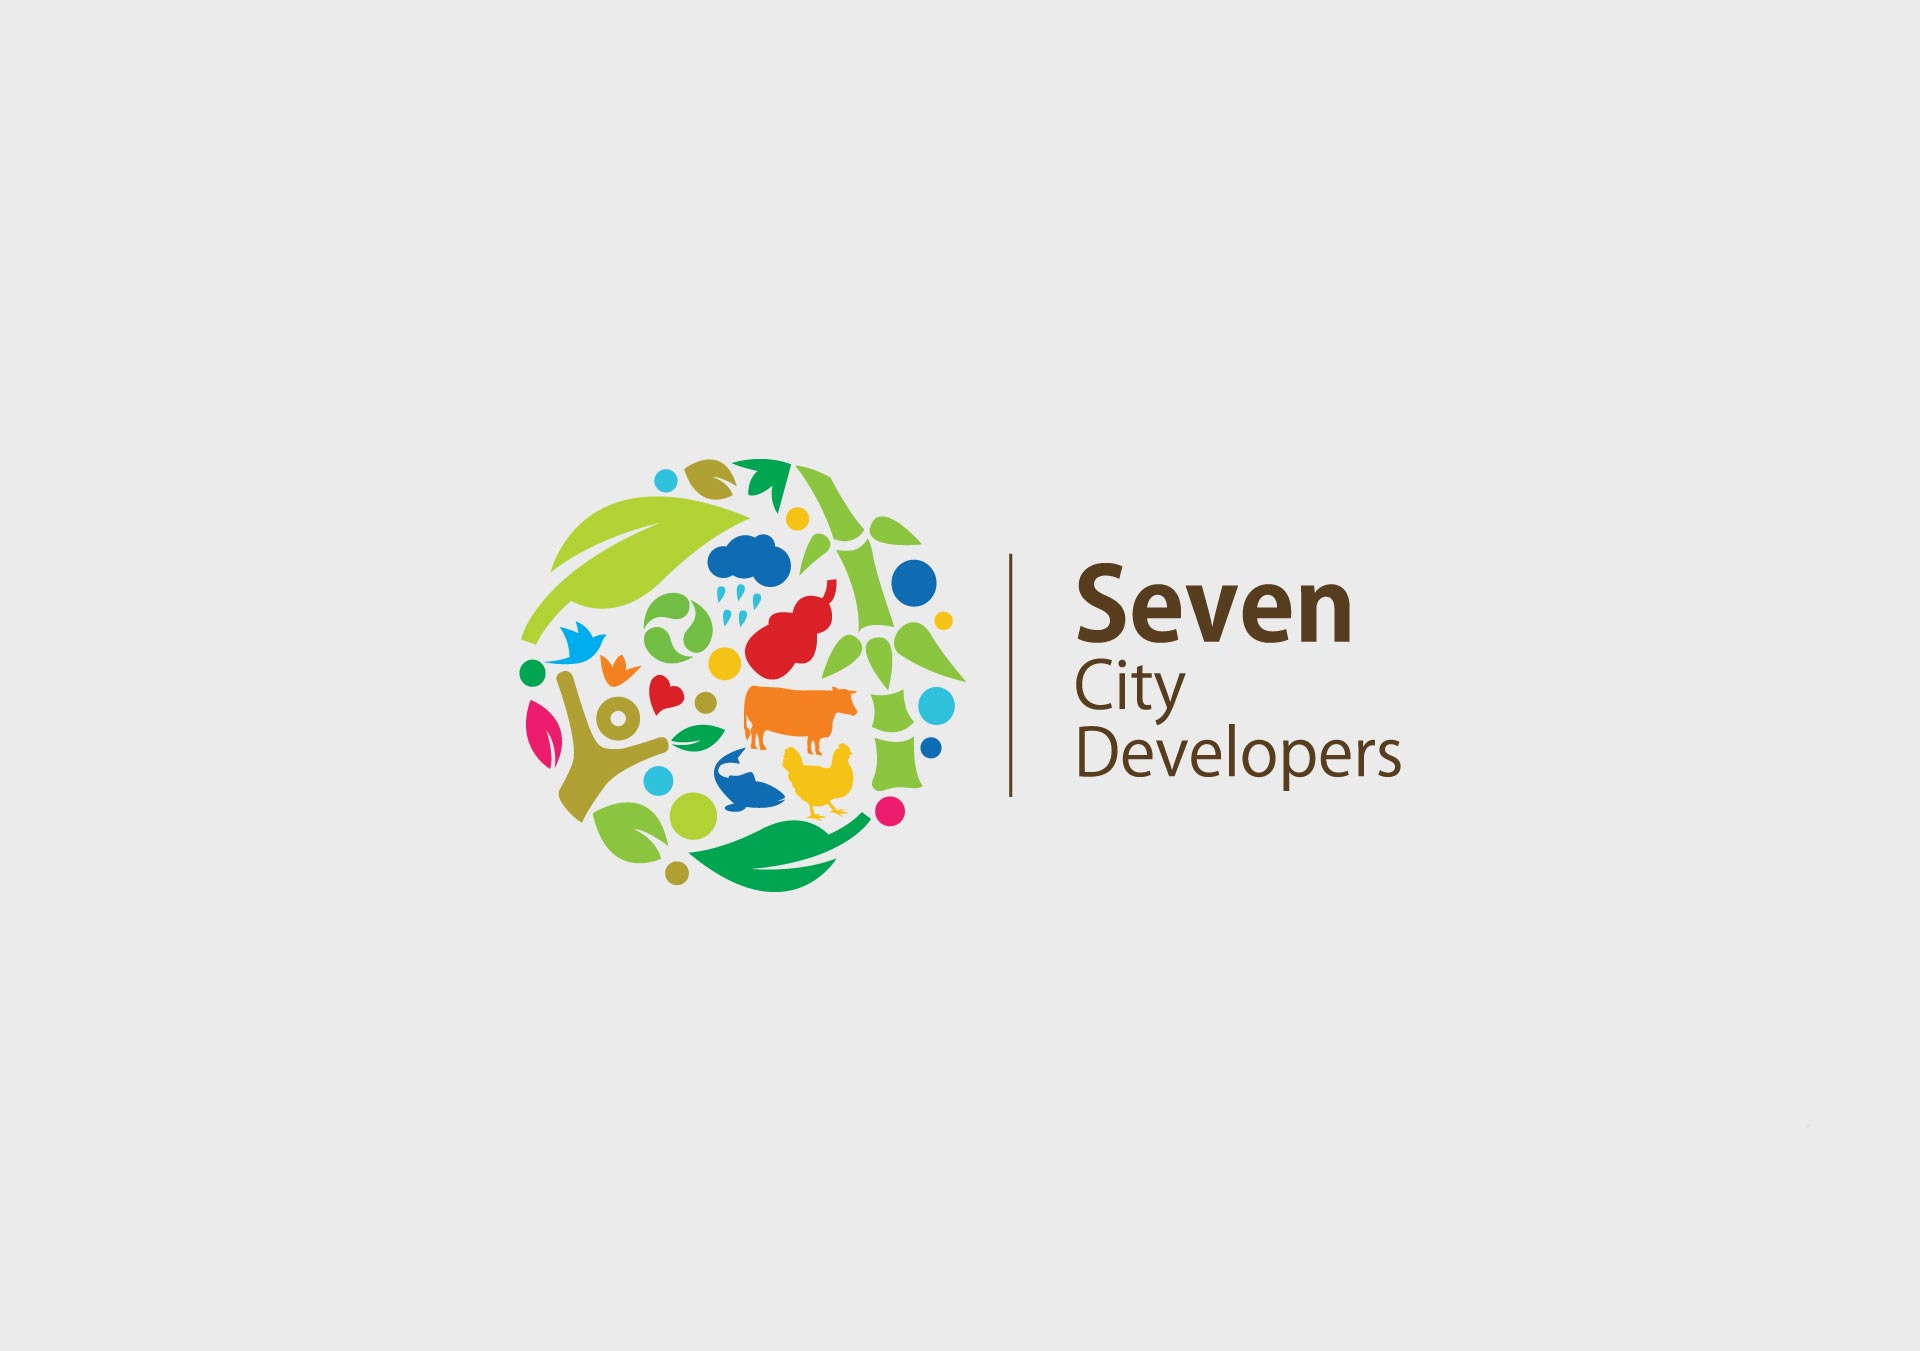 Seven City Developers